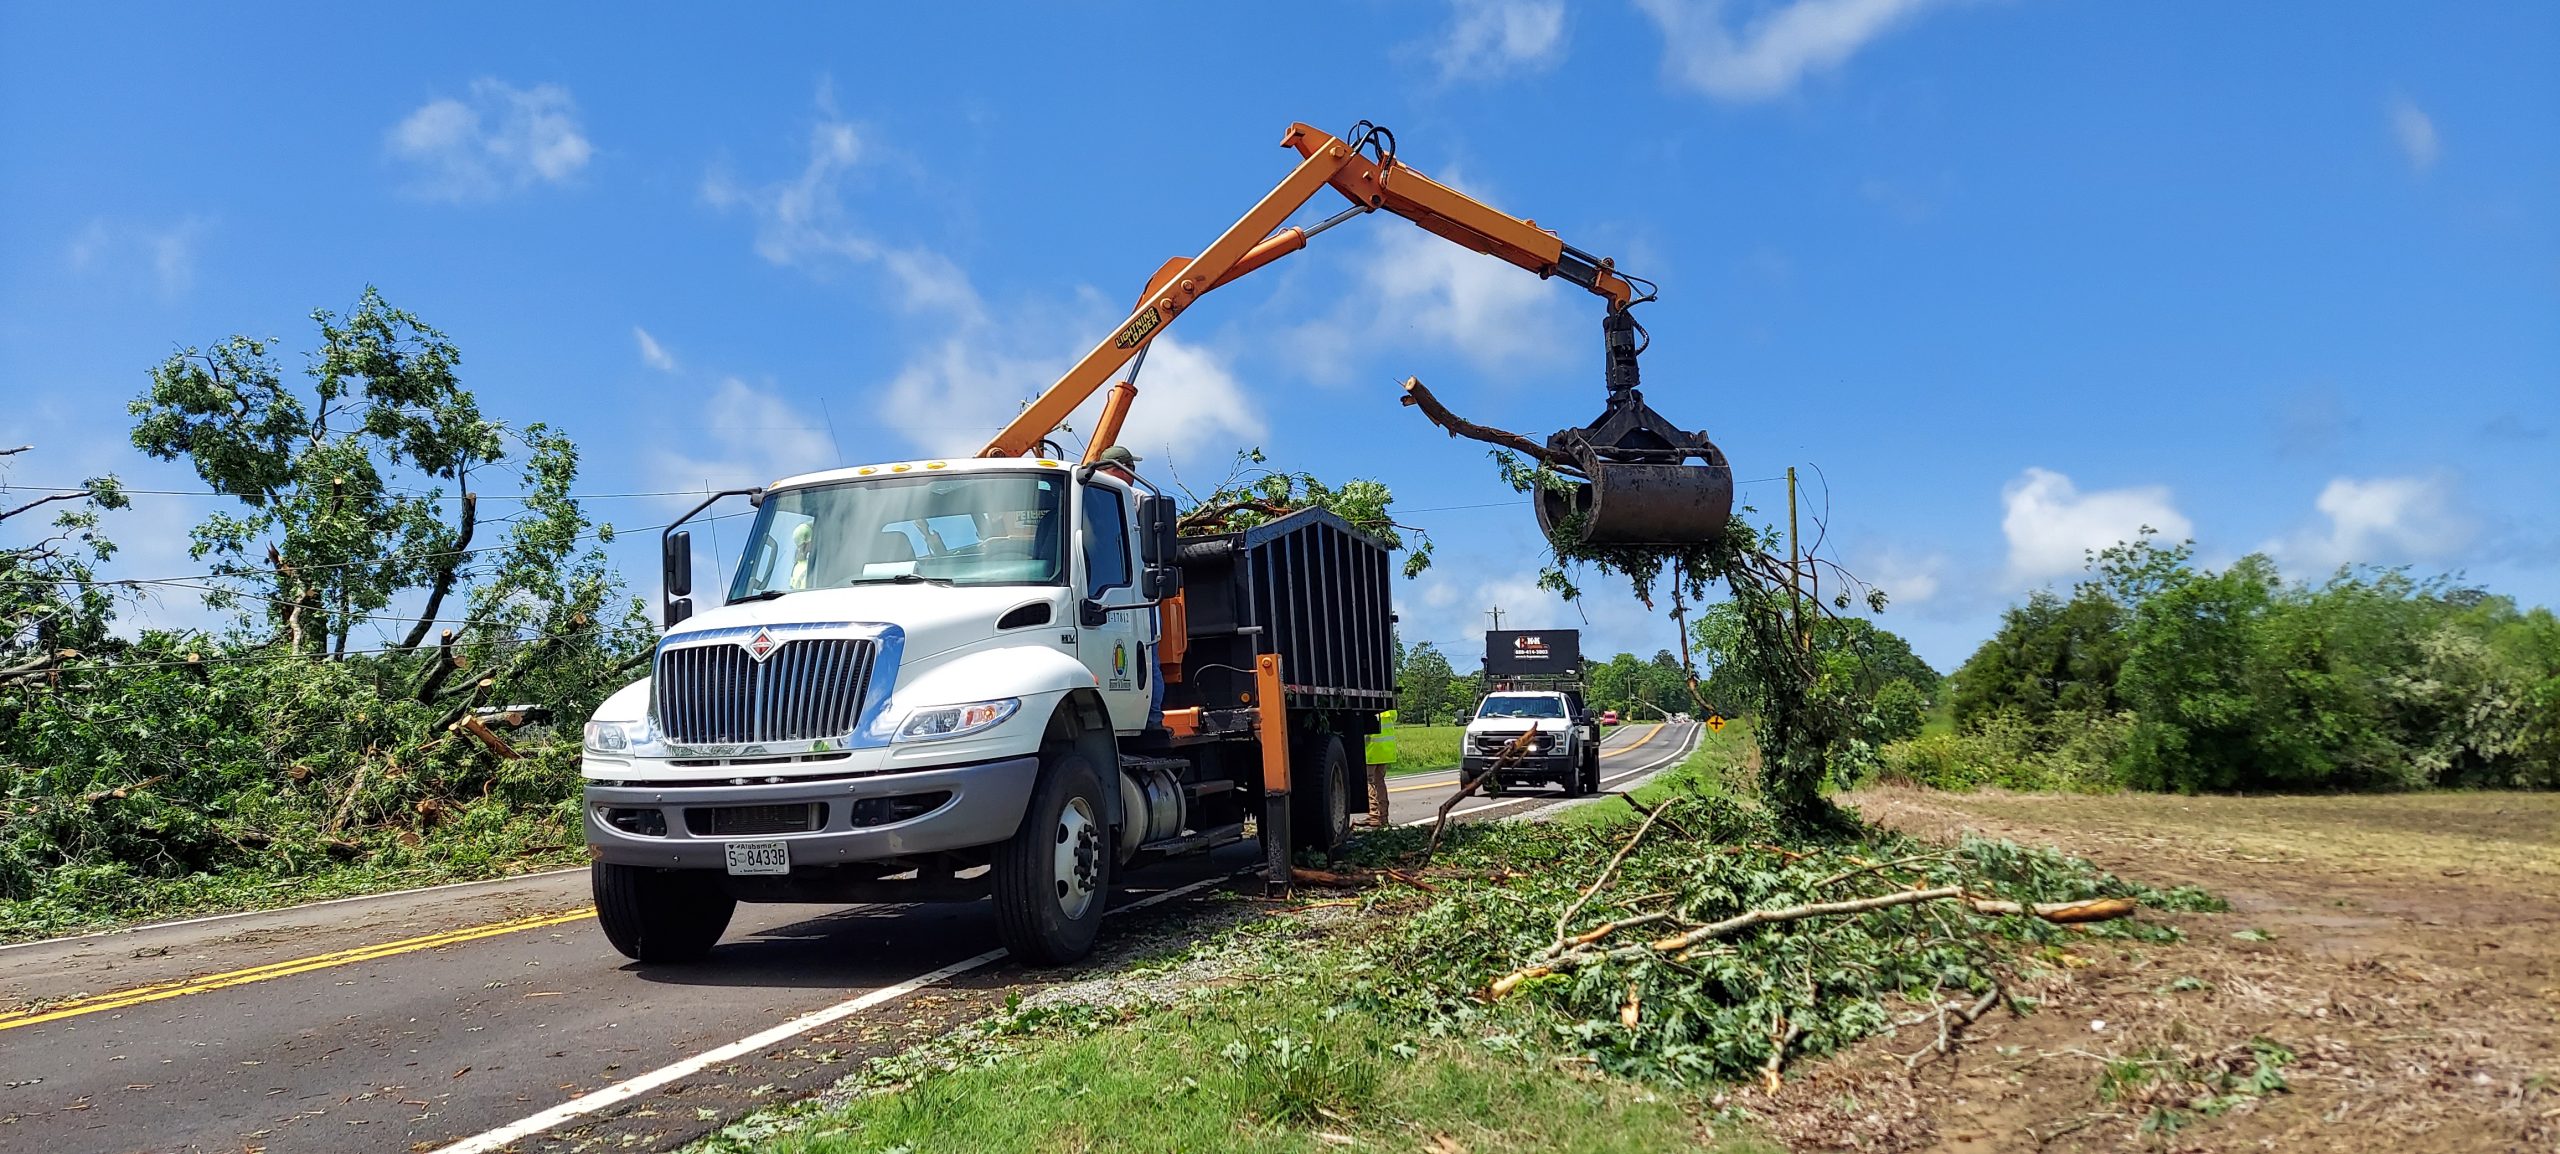 A grapple lifts tree limbs into an ALDOT brush truck.